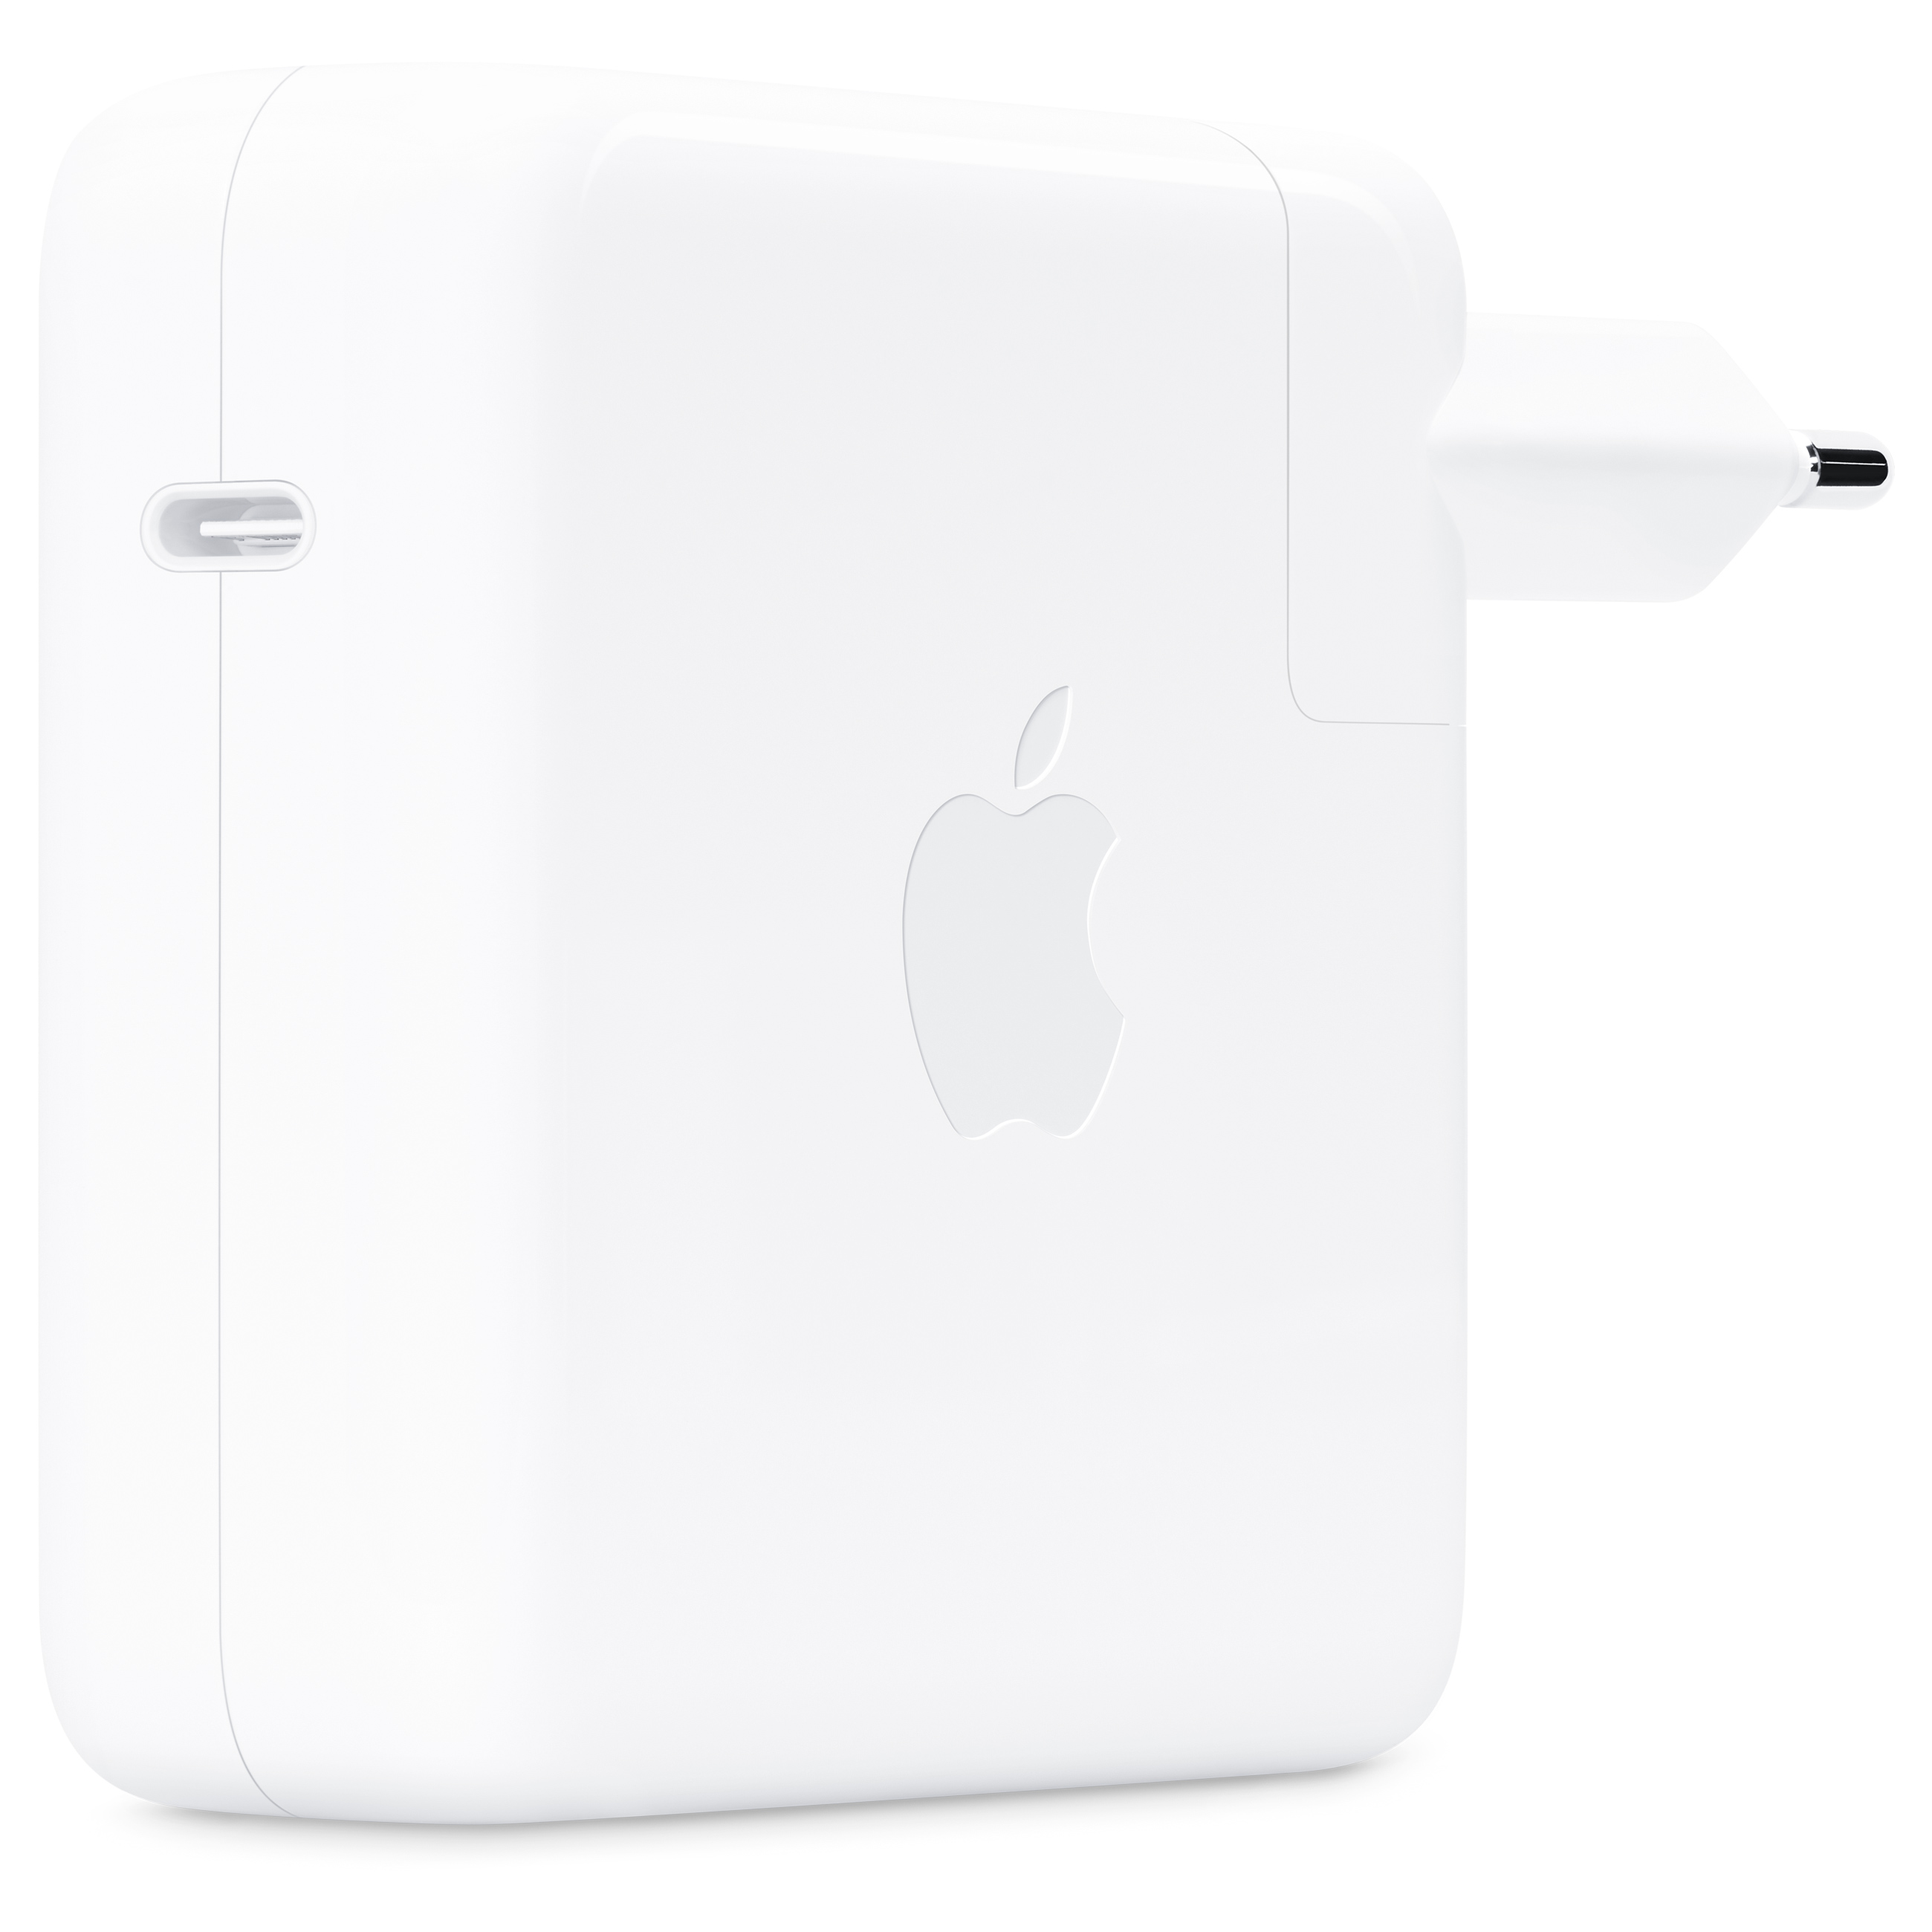 Apple USB-C Power Adapter - Ladegerät für 16" MacBook ProOVP geöffnet - geöffnet